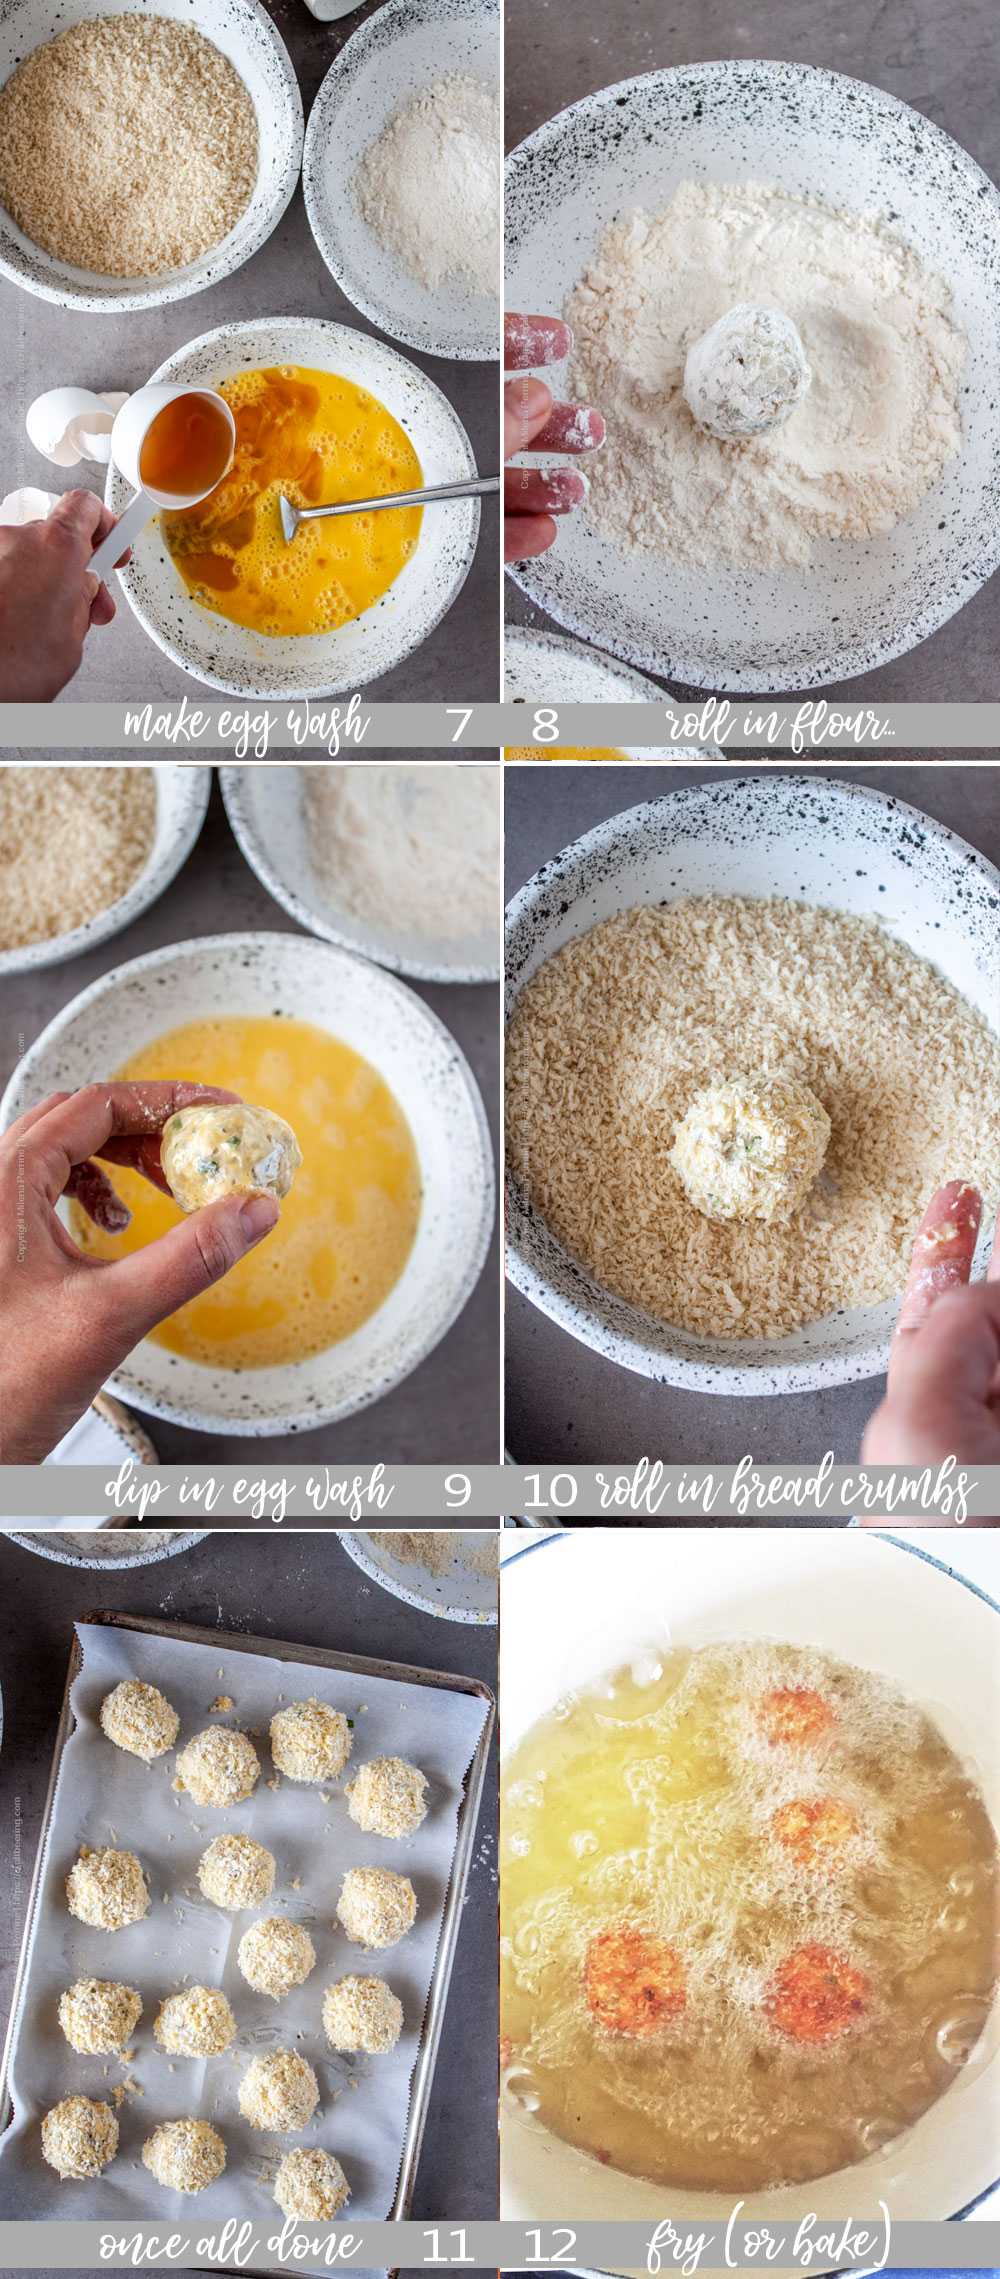 How to bread prepared sauerkraut balls and fry them. 